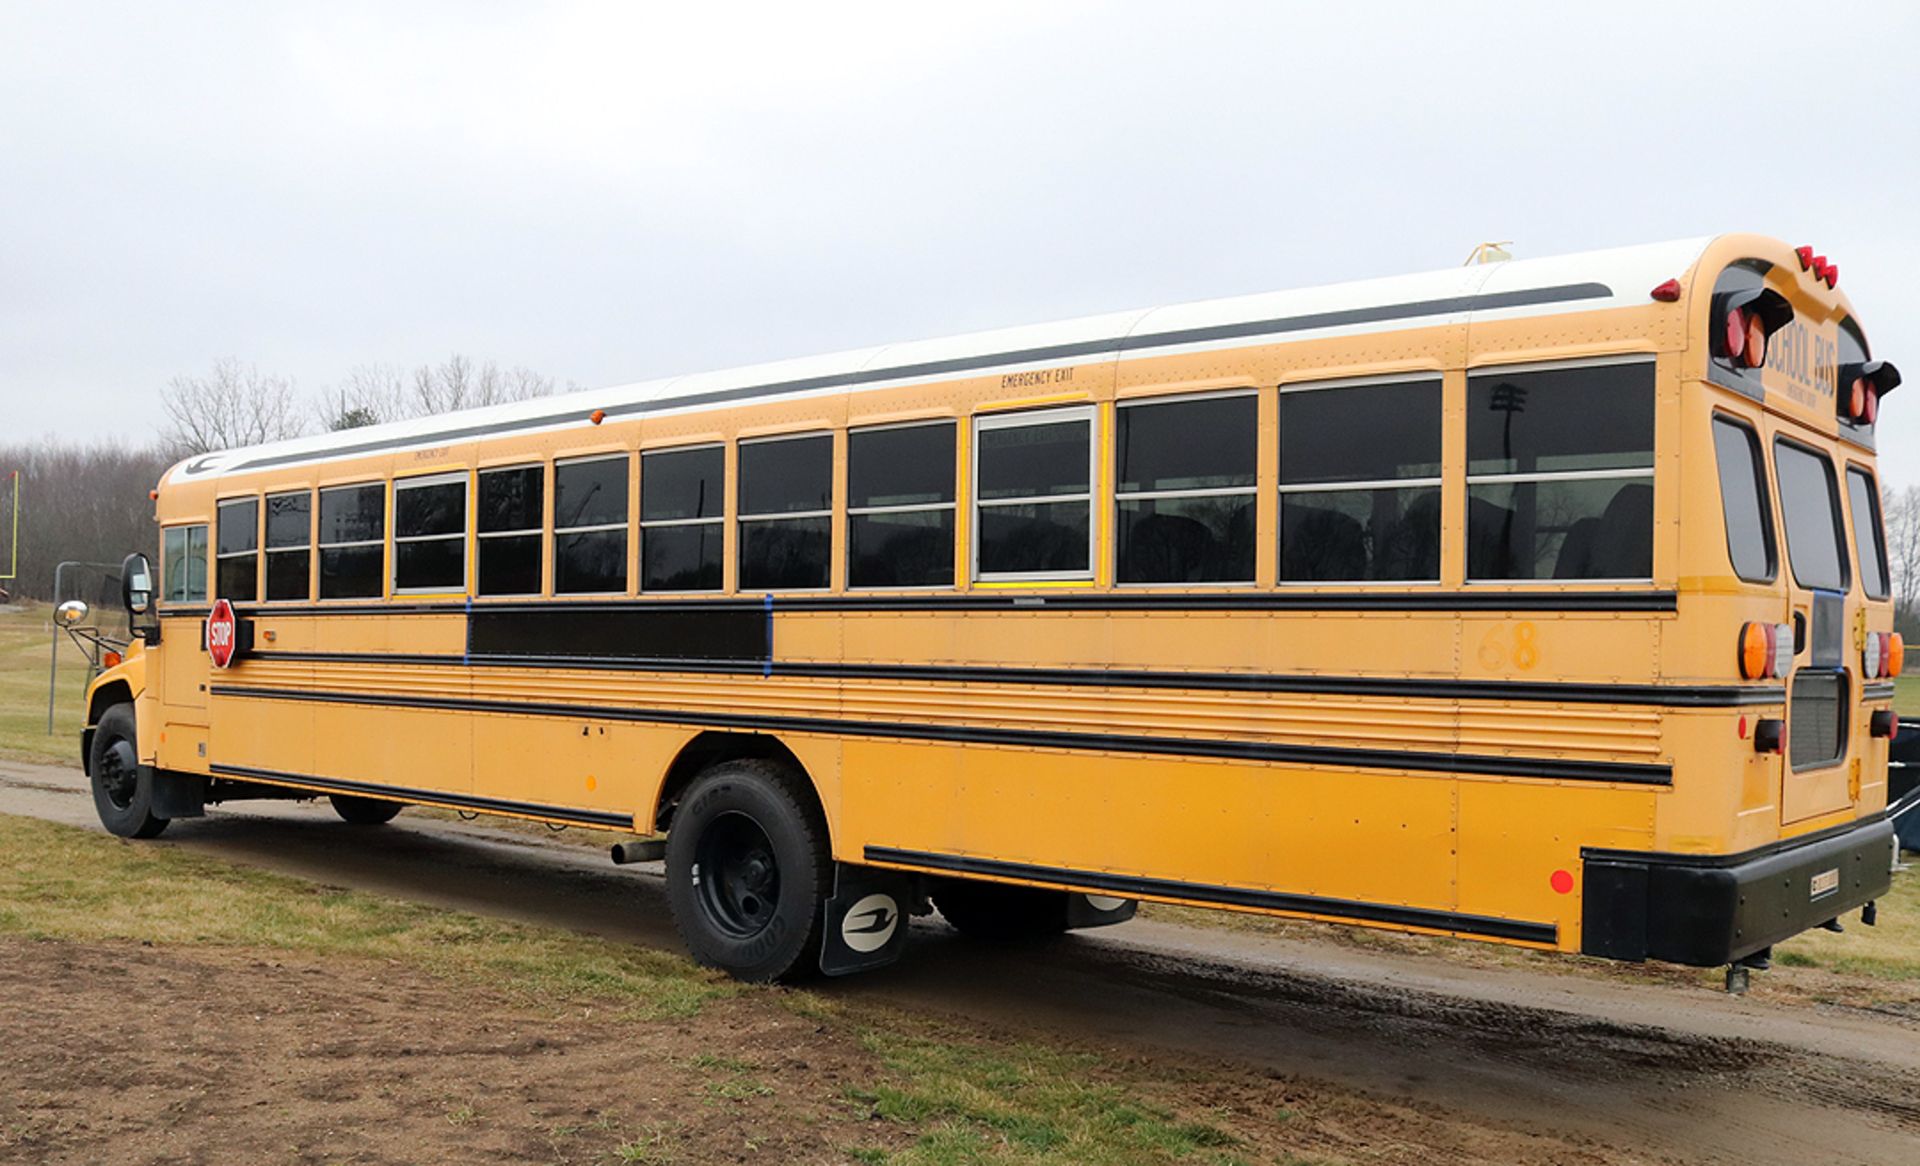 2011 Bluebird 78 Passenger School Bus with Cummins Engine, 110,600 miles, VIN 1BAKJCPA5BF278666 - Image 5 of 16